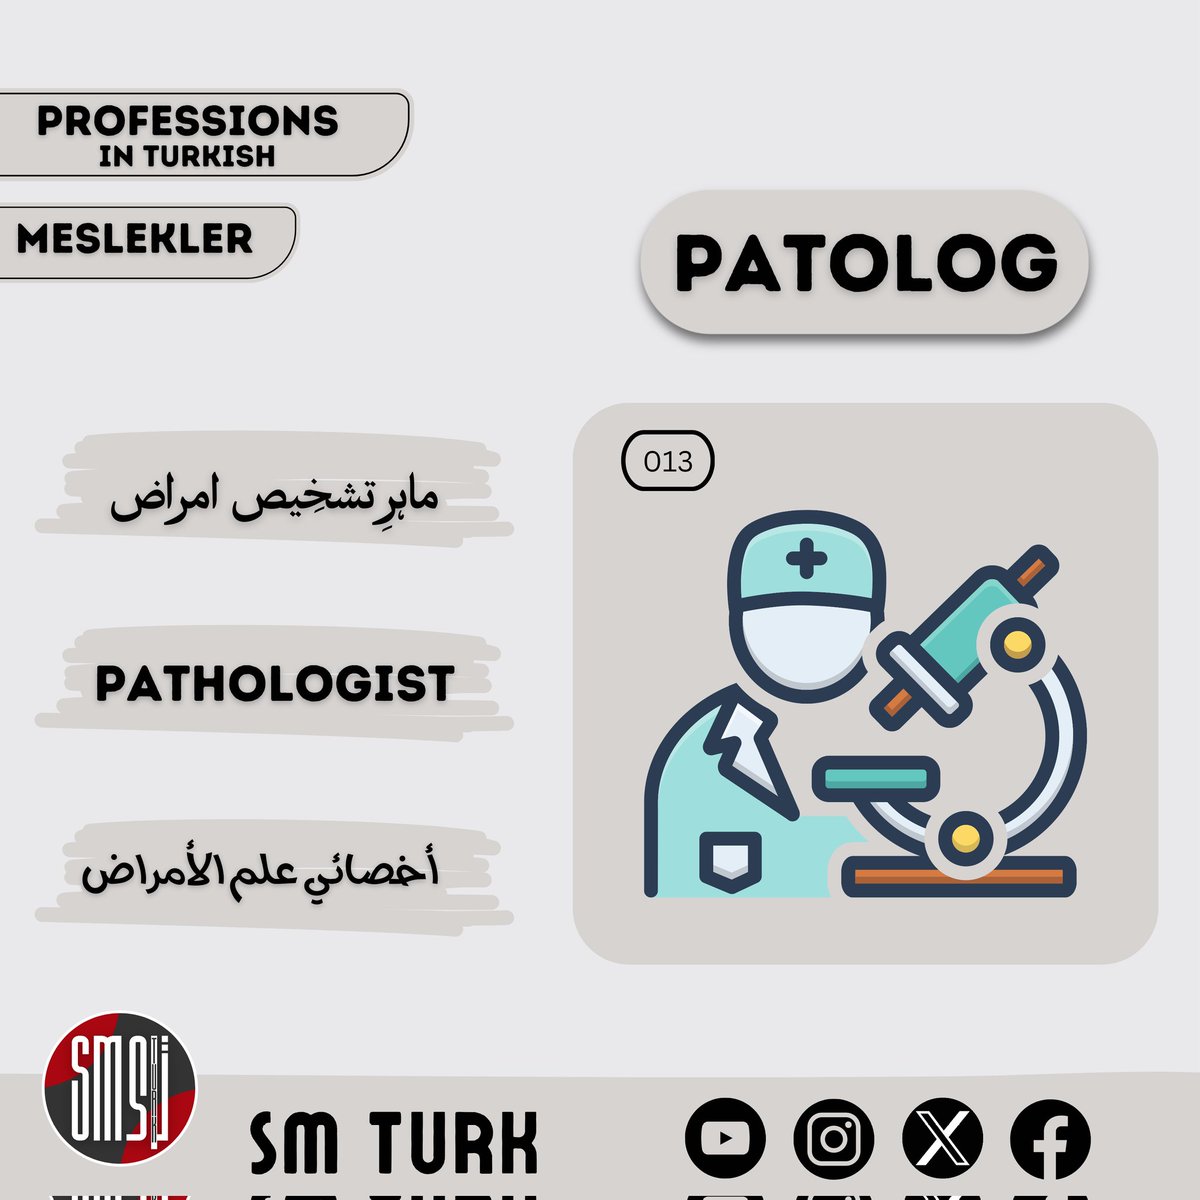 Learn Turkish with @SMTURK50
Meslekler _ پیشے
.
.
.
#smturk #sufyanmustafa #doctors #doctorlife #doktorlar #طبیب #doctorjobs  #language #learnlanguages #languagelearning #languageskills #Turkish #englishvocabulary #Arabic #urdu #englishgrammar #turkishlanguage #turkishlanguage